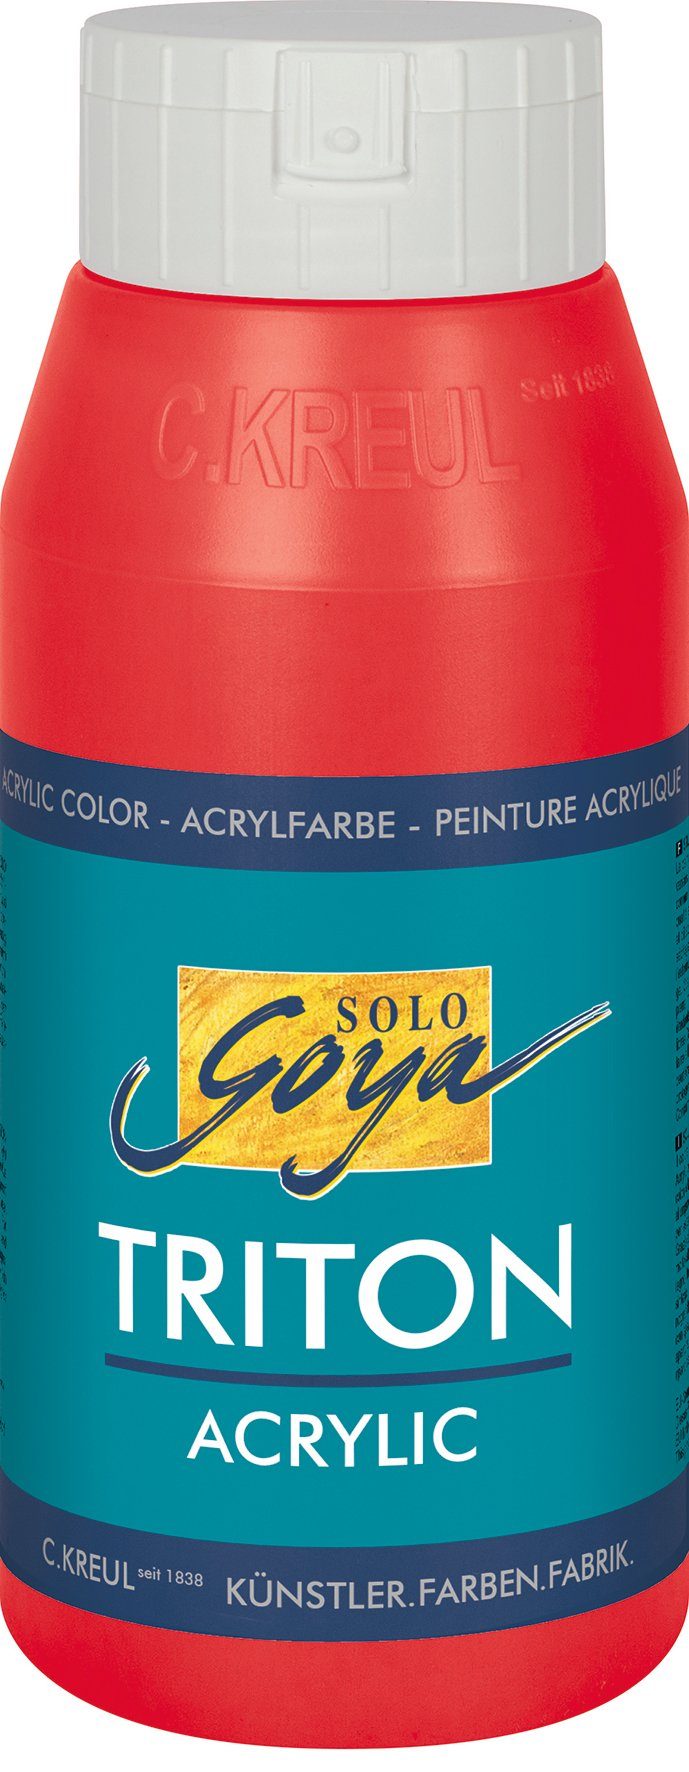 Kreul Acrylfarbe Solo Goya Triton Acrylic, 750 ml Kirschrot